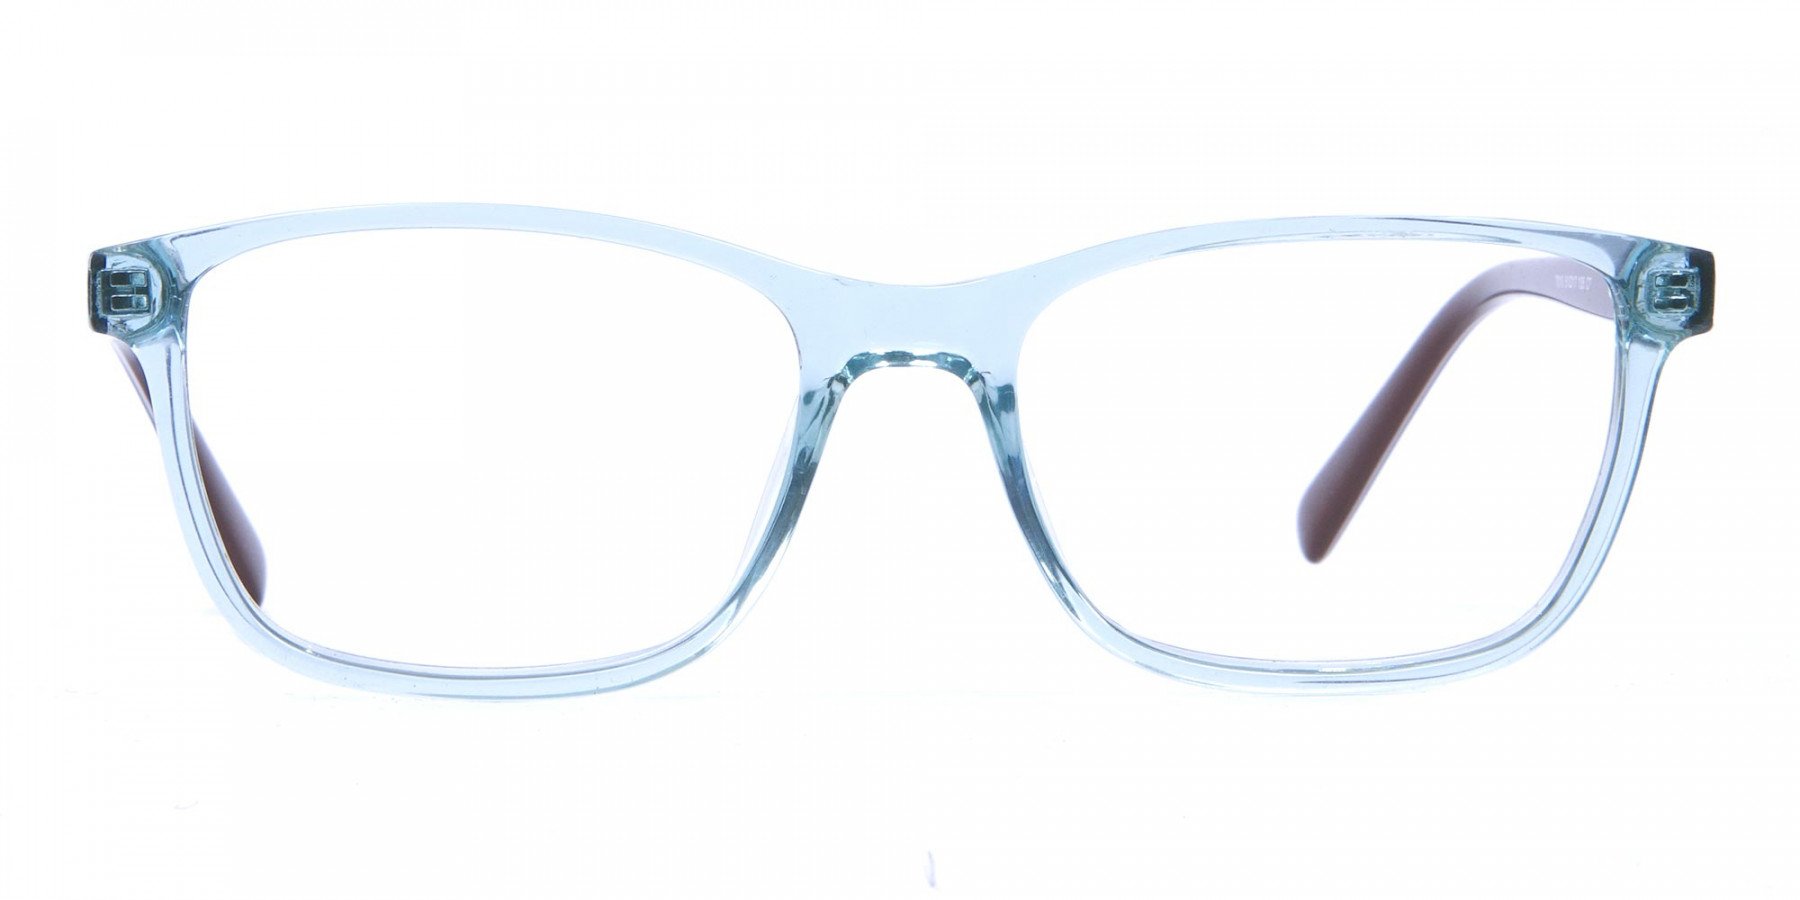 Wayfarer glasses in Powder Blue for Men & Women -1